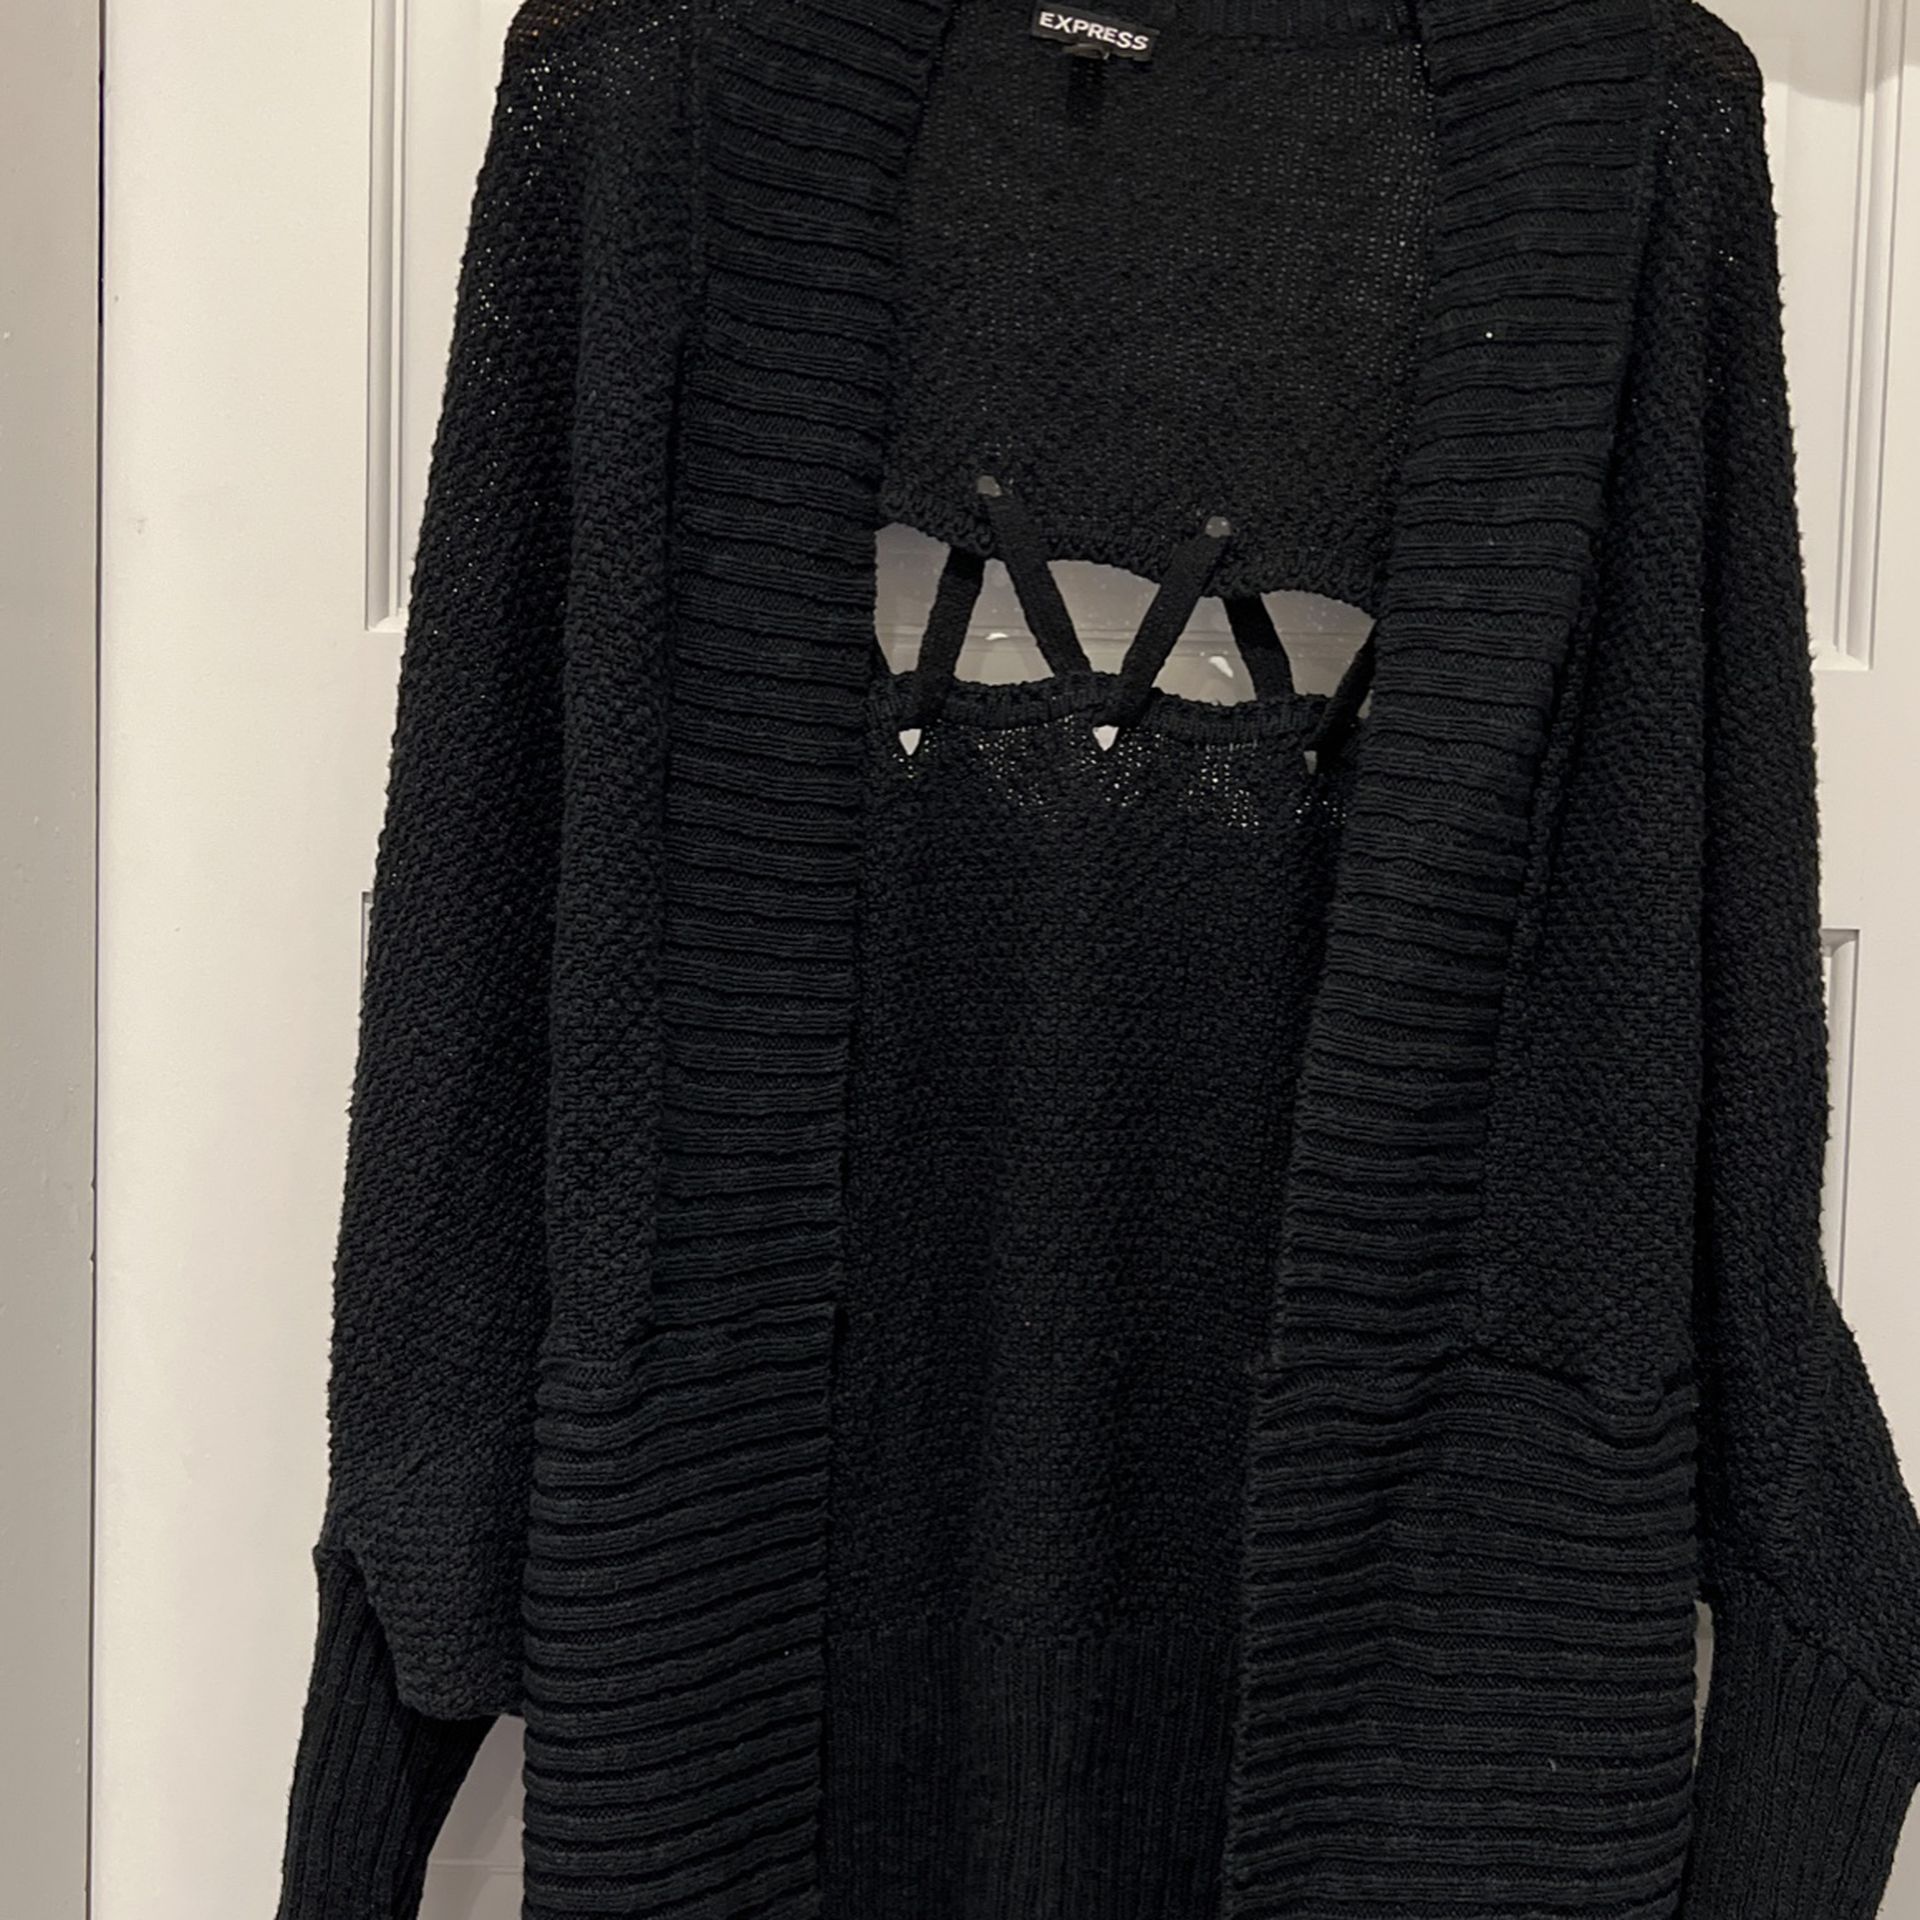 Express Cardigan Sweater Size XS 